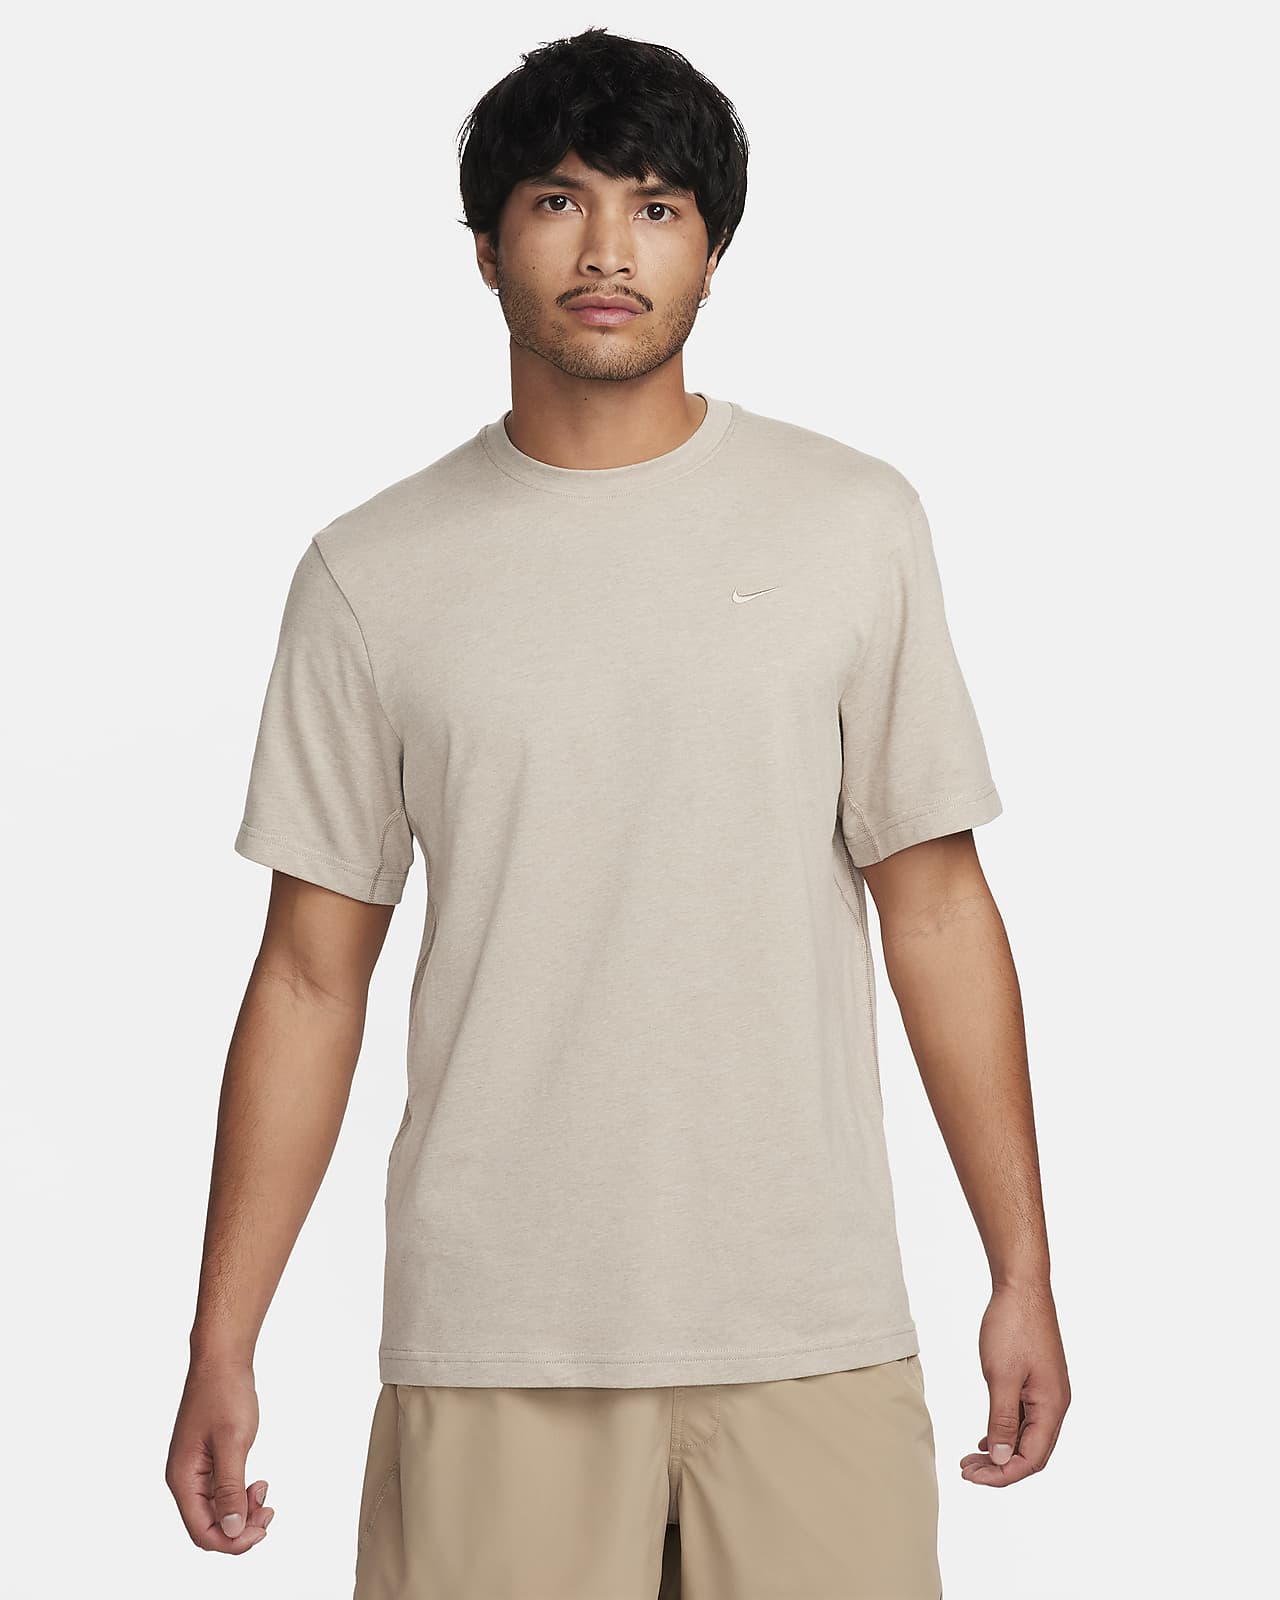 Pánské všestranné tričko Nike Primary Dri-FIT s krátkým rukávem